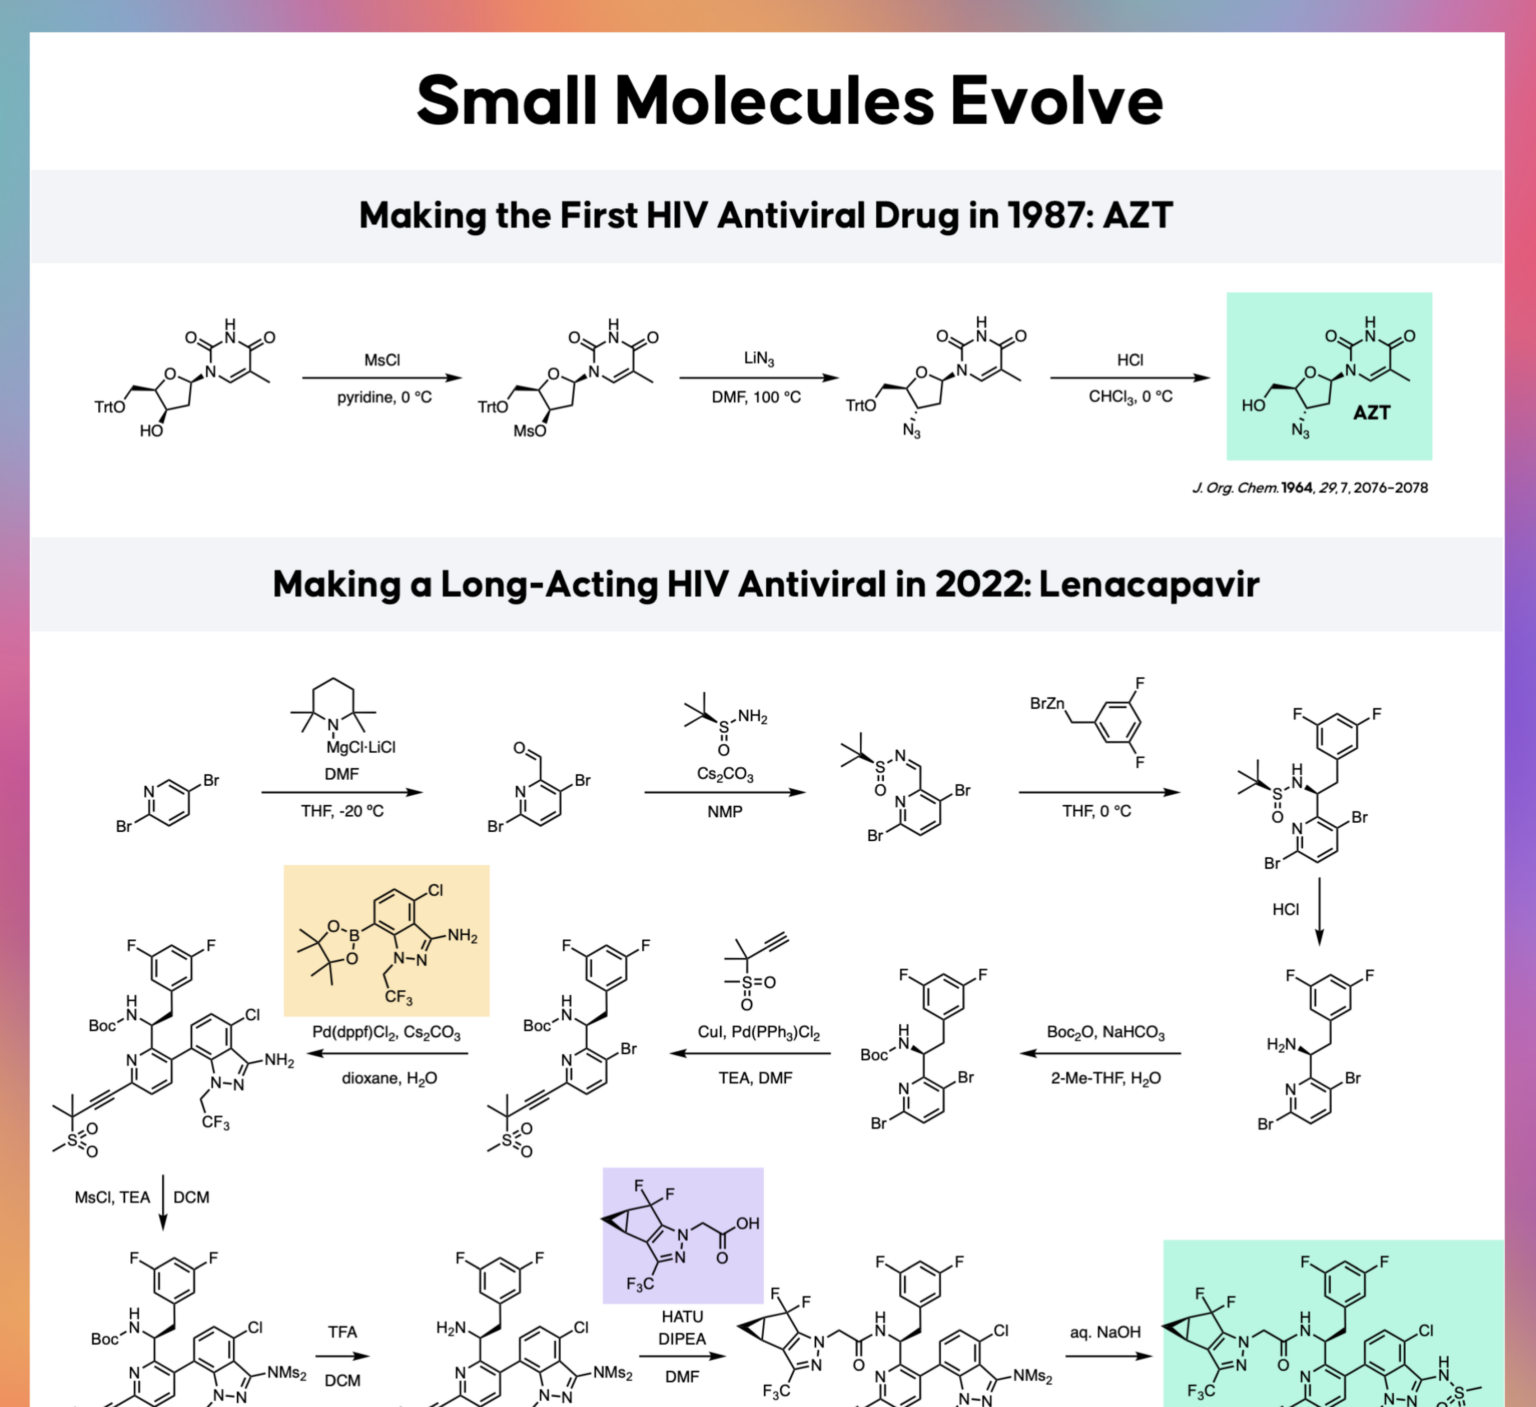 Small Molecules Evolve Cover Image